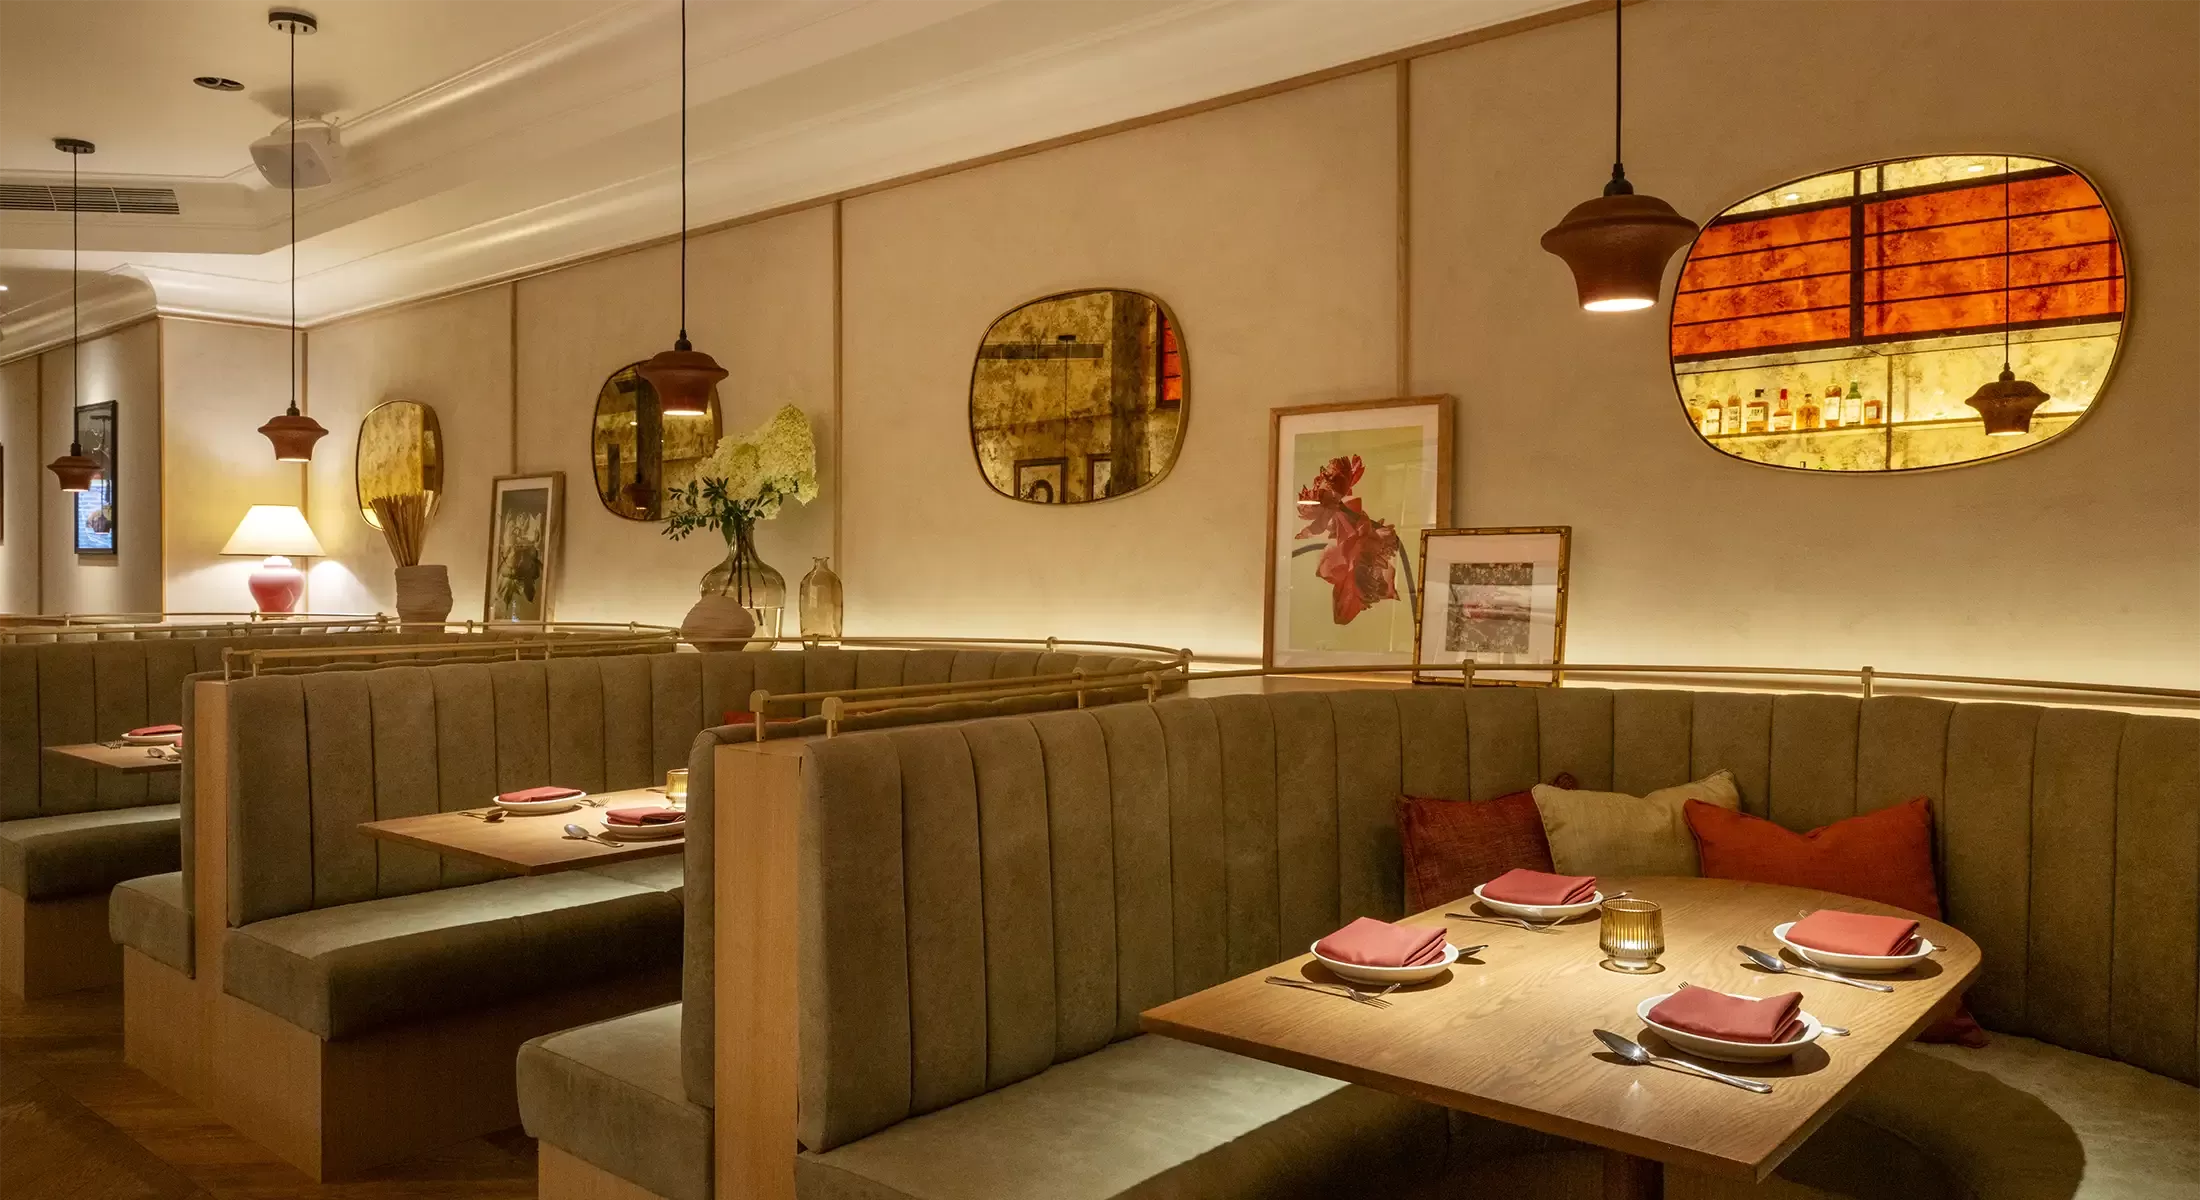 Ralph Lauren's chic restaurant delivers a taste of America on